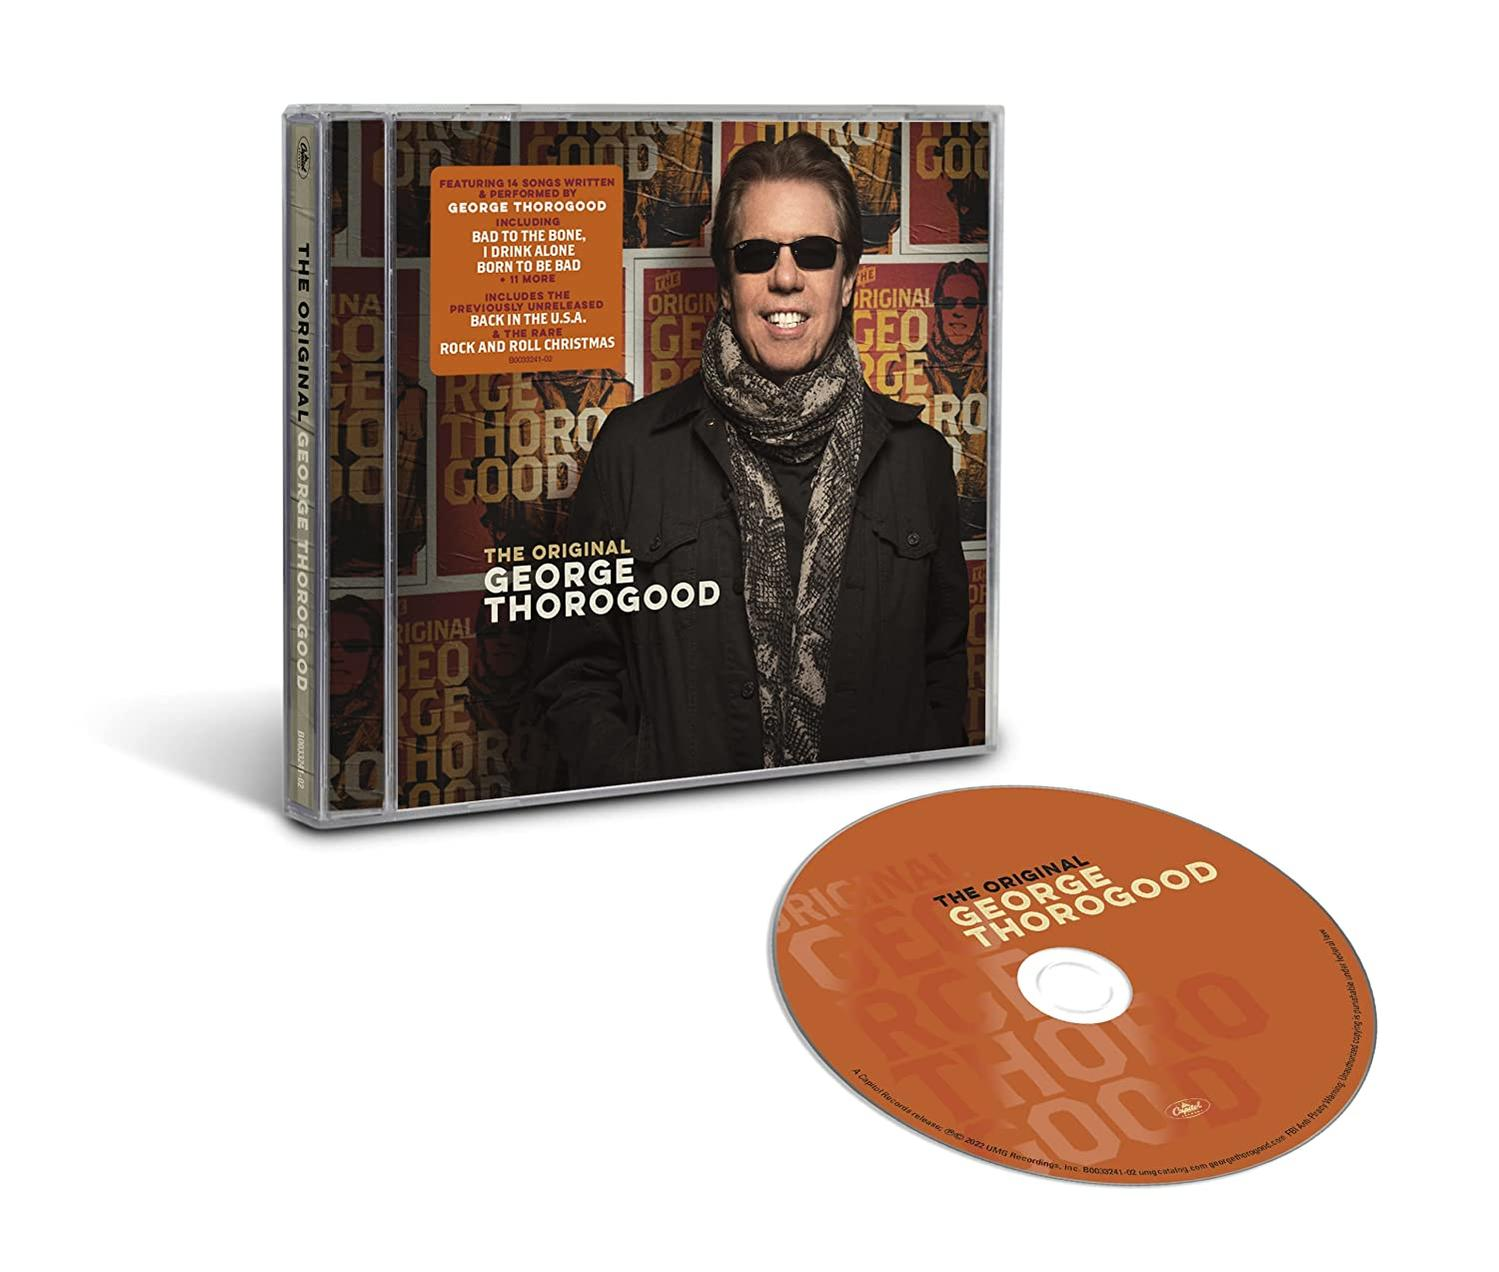 The Thorogood (CD) Original - - George